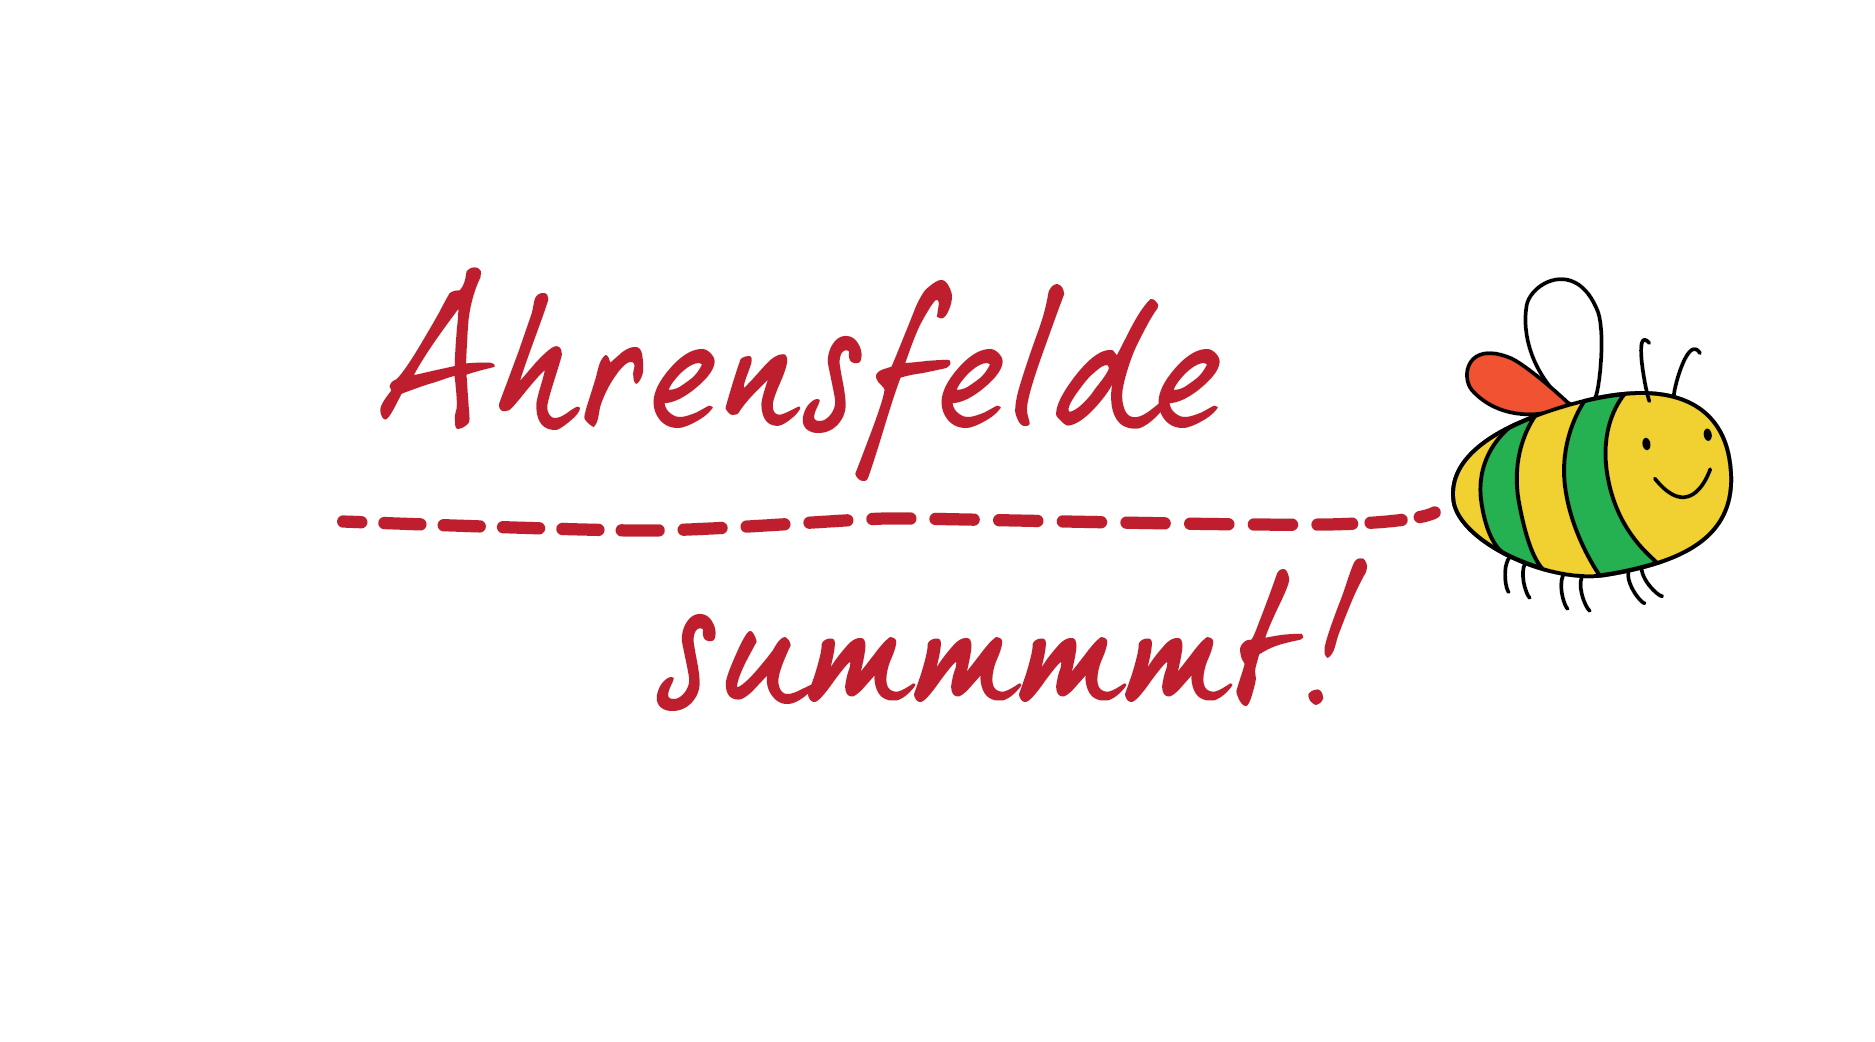 Banner "Ahrensfelde summt!"